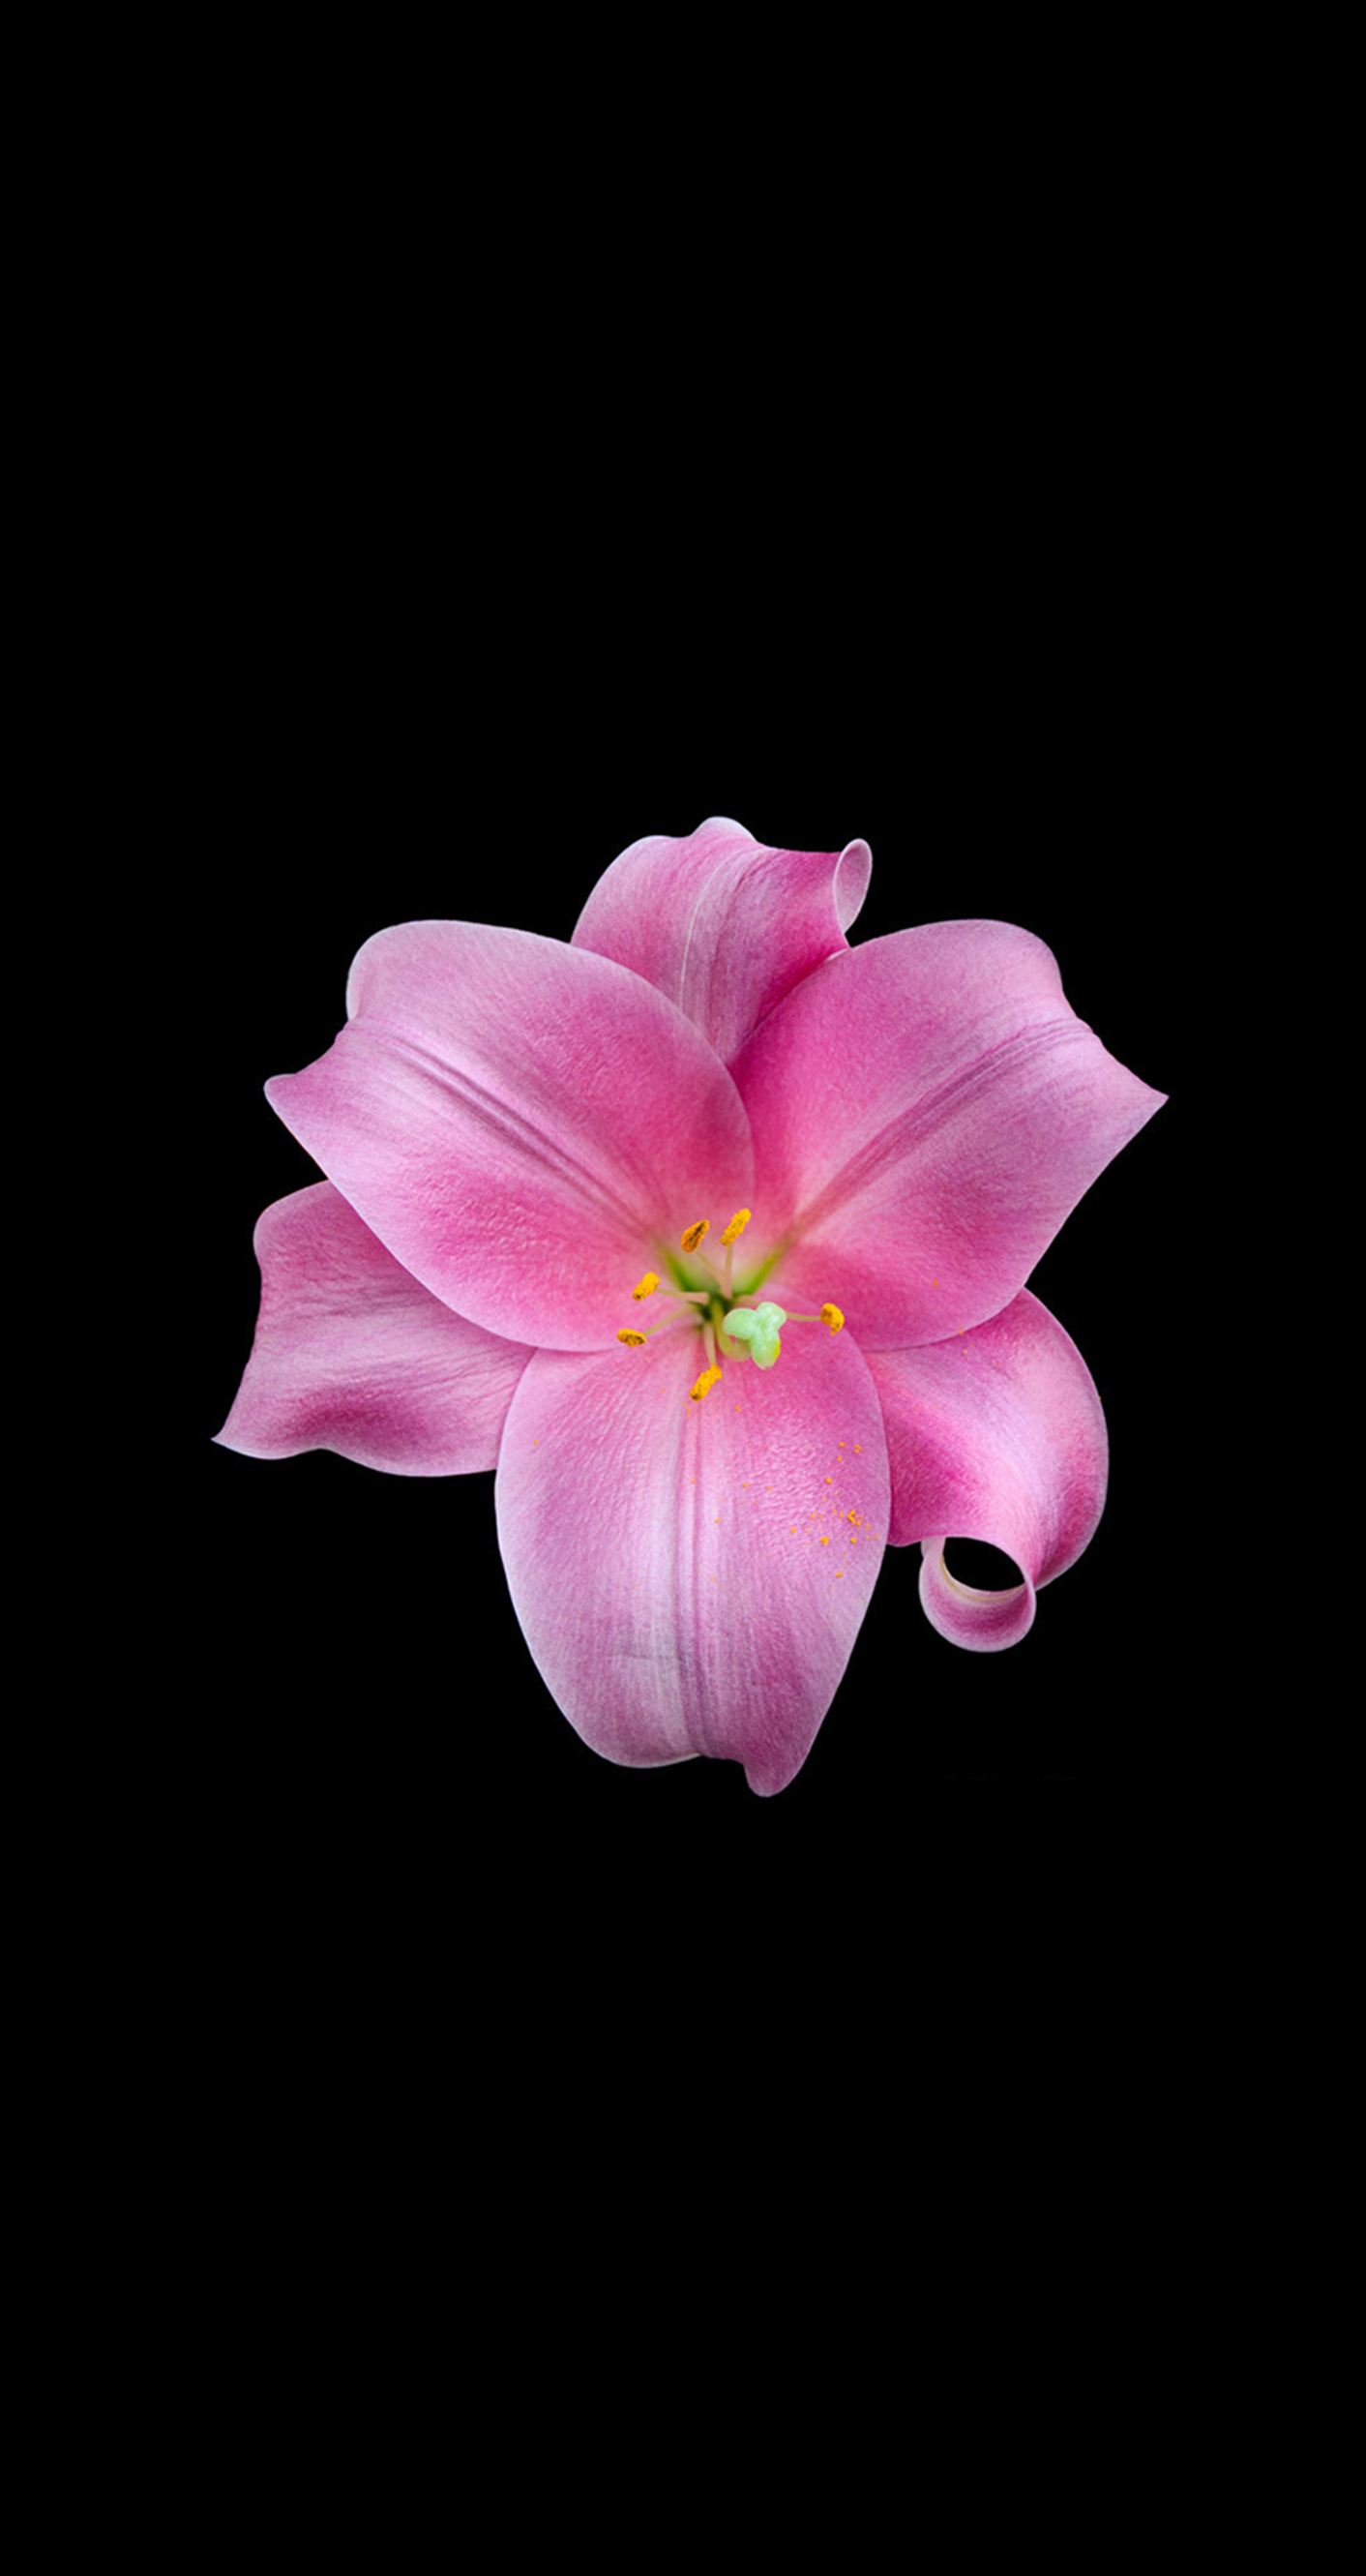 flower wallpaper iphone,petal,pink,flower,plant,flowering plant